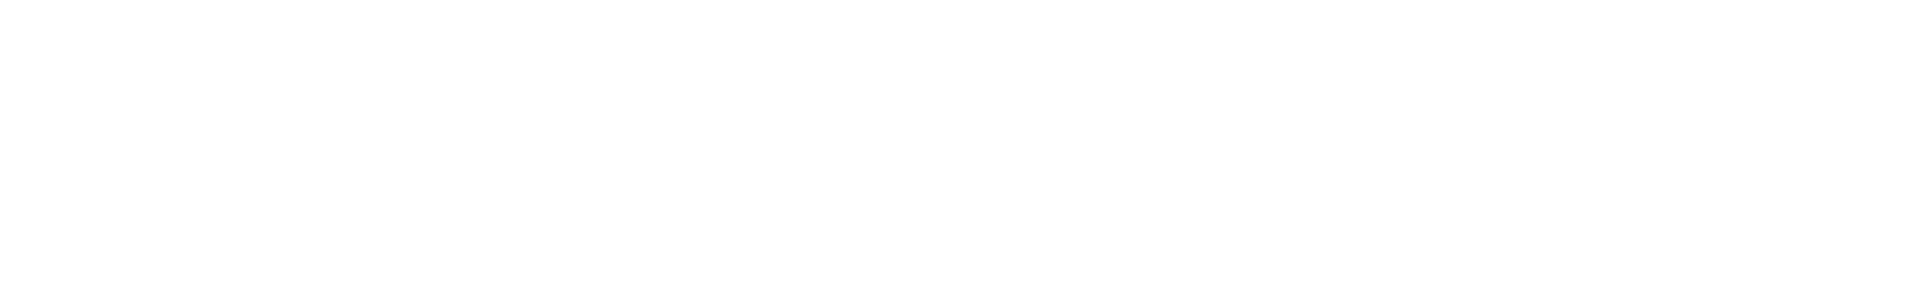 Vision Lifestyle Centers Logo